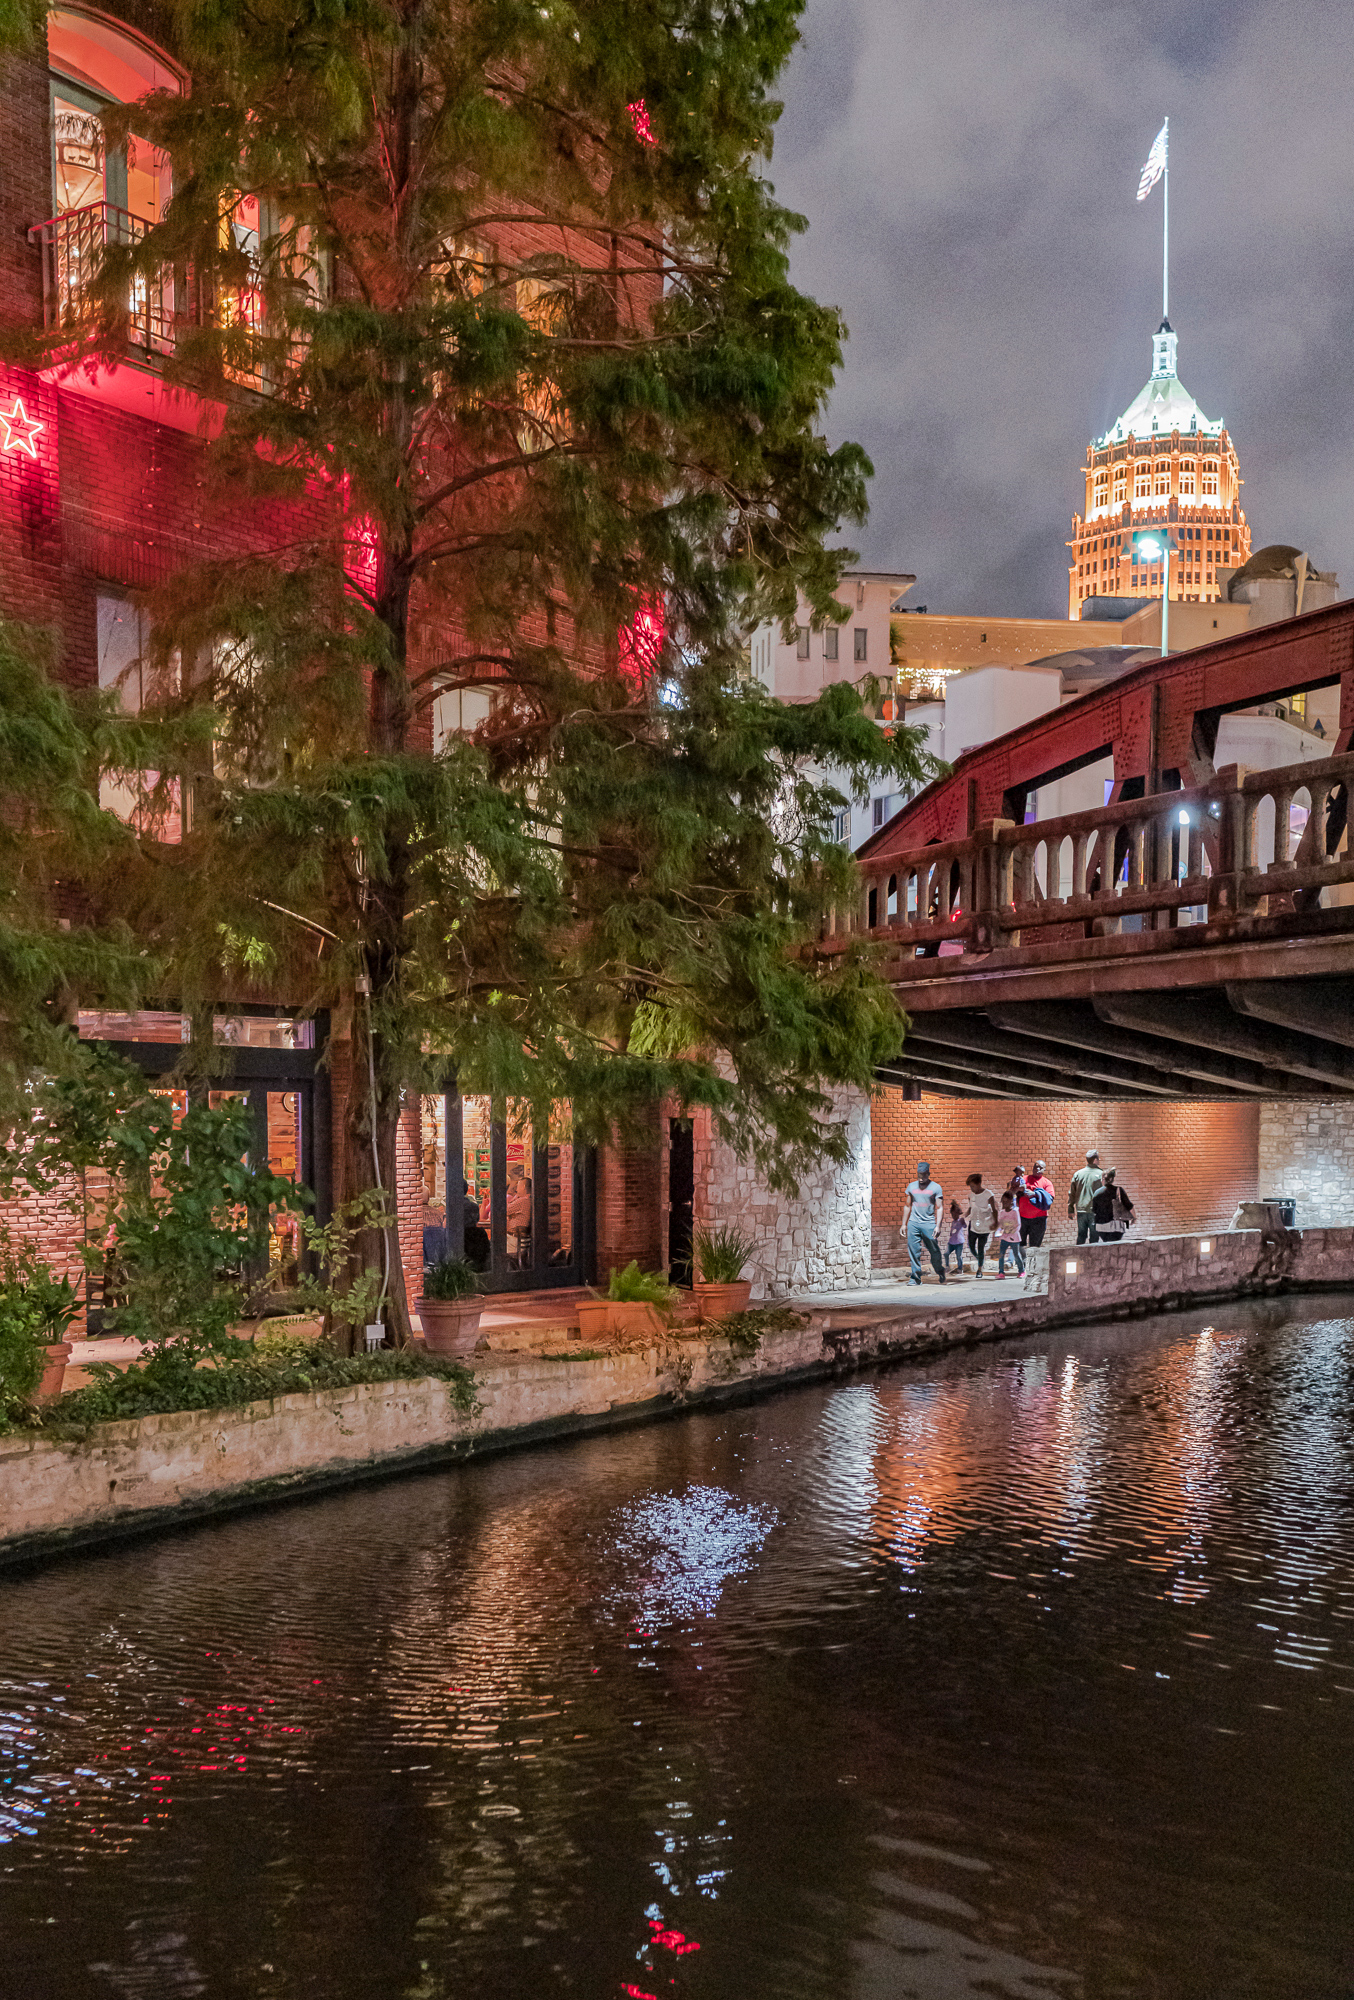 San Antonio Riverwalk comes to life at night